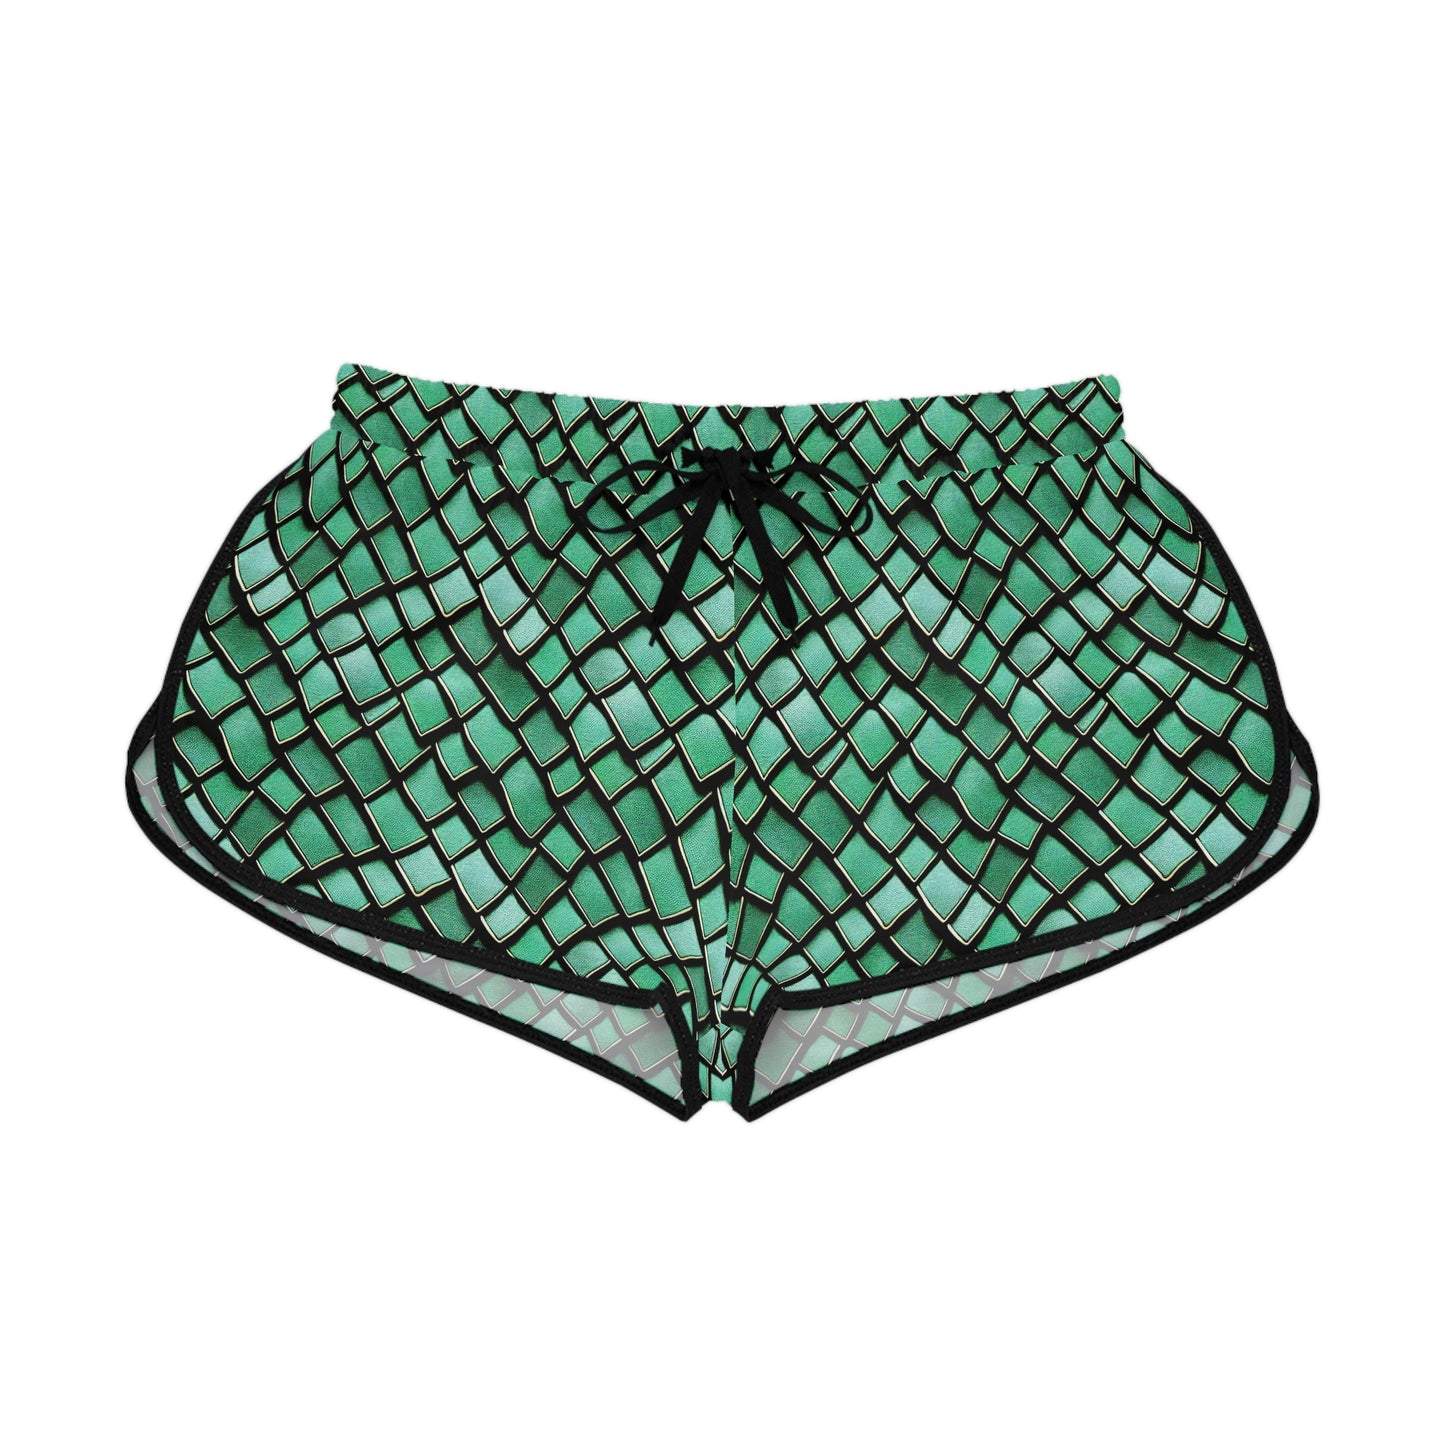 Green Mermaid Dragon Scale Women's Custom-Printed Shorts - Ocean Inspired Design, Gym, Beach, Pool, Workout, Athleticwear,